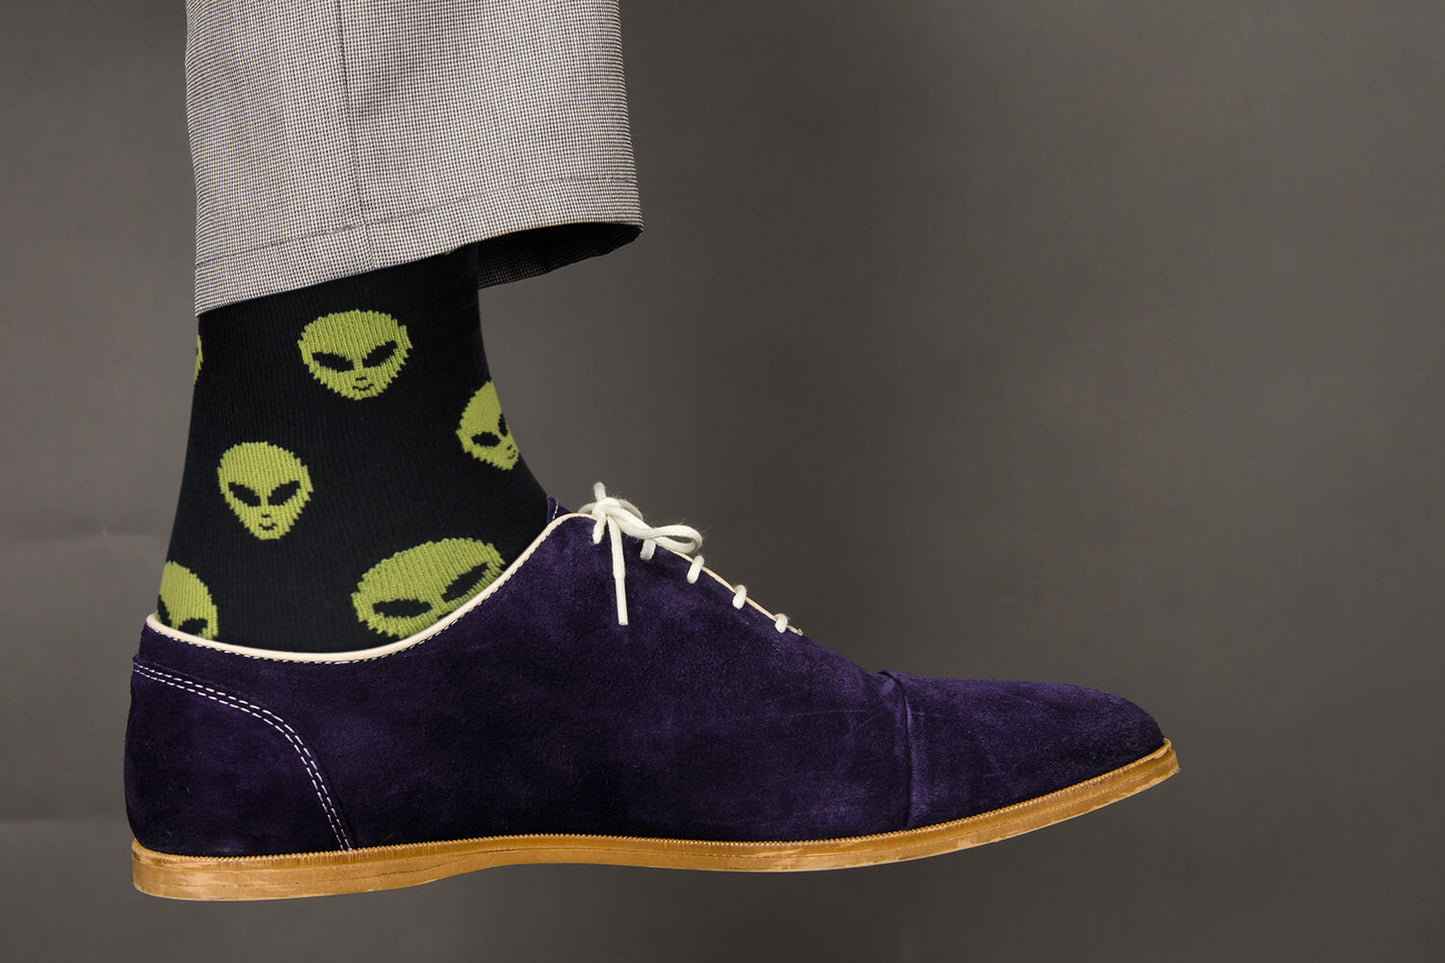 Real Sic – Alien Socks